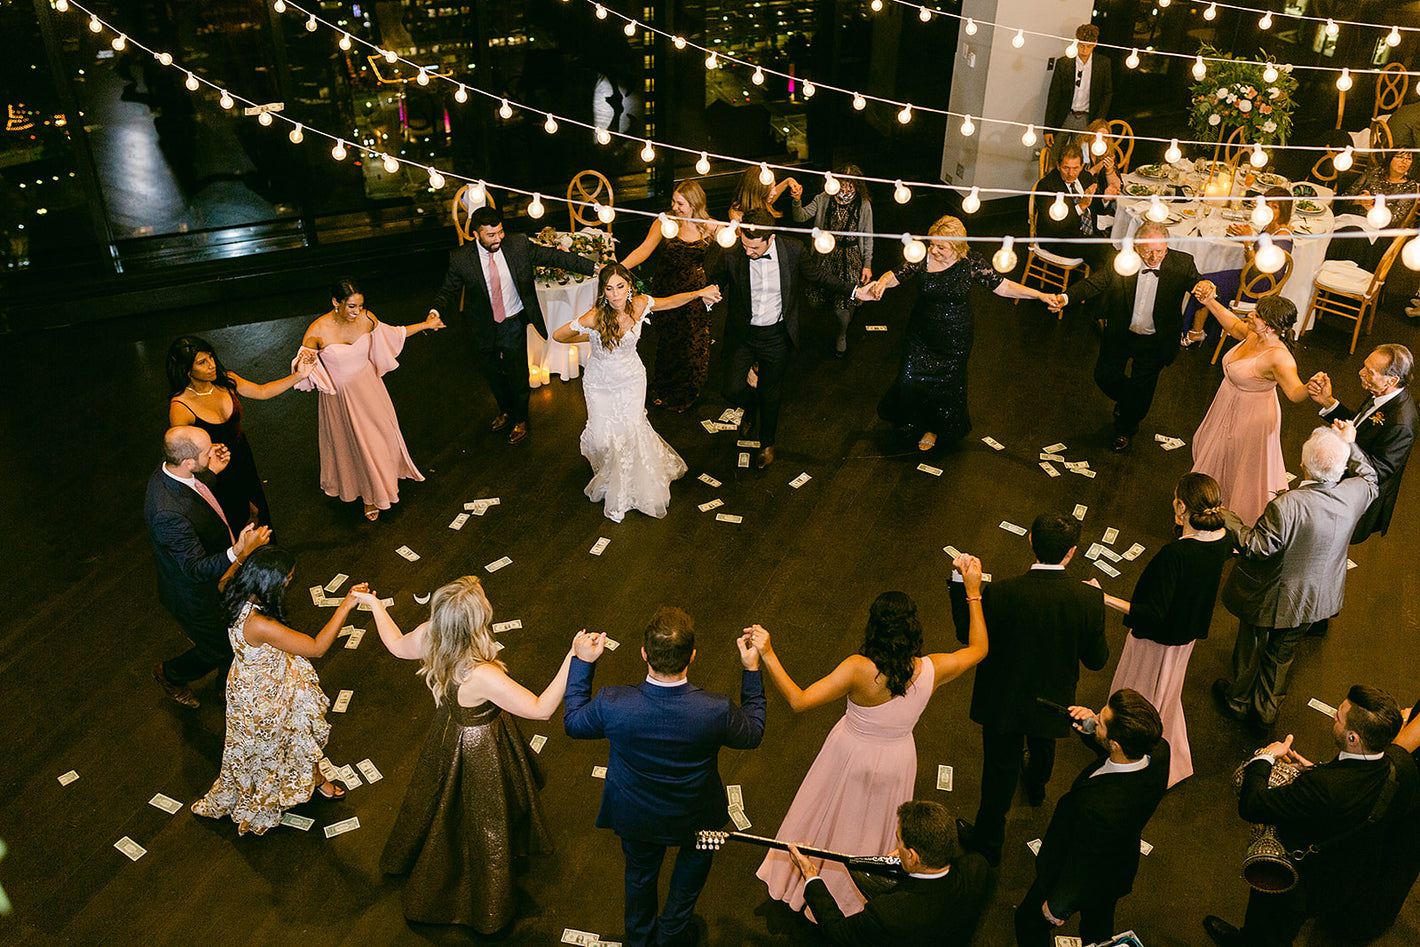 Sirtaki dance perfromed at Boston wedding wioth greek traditions